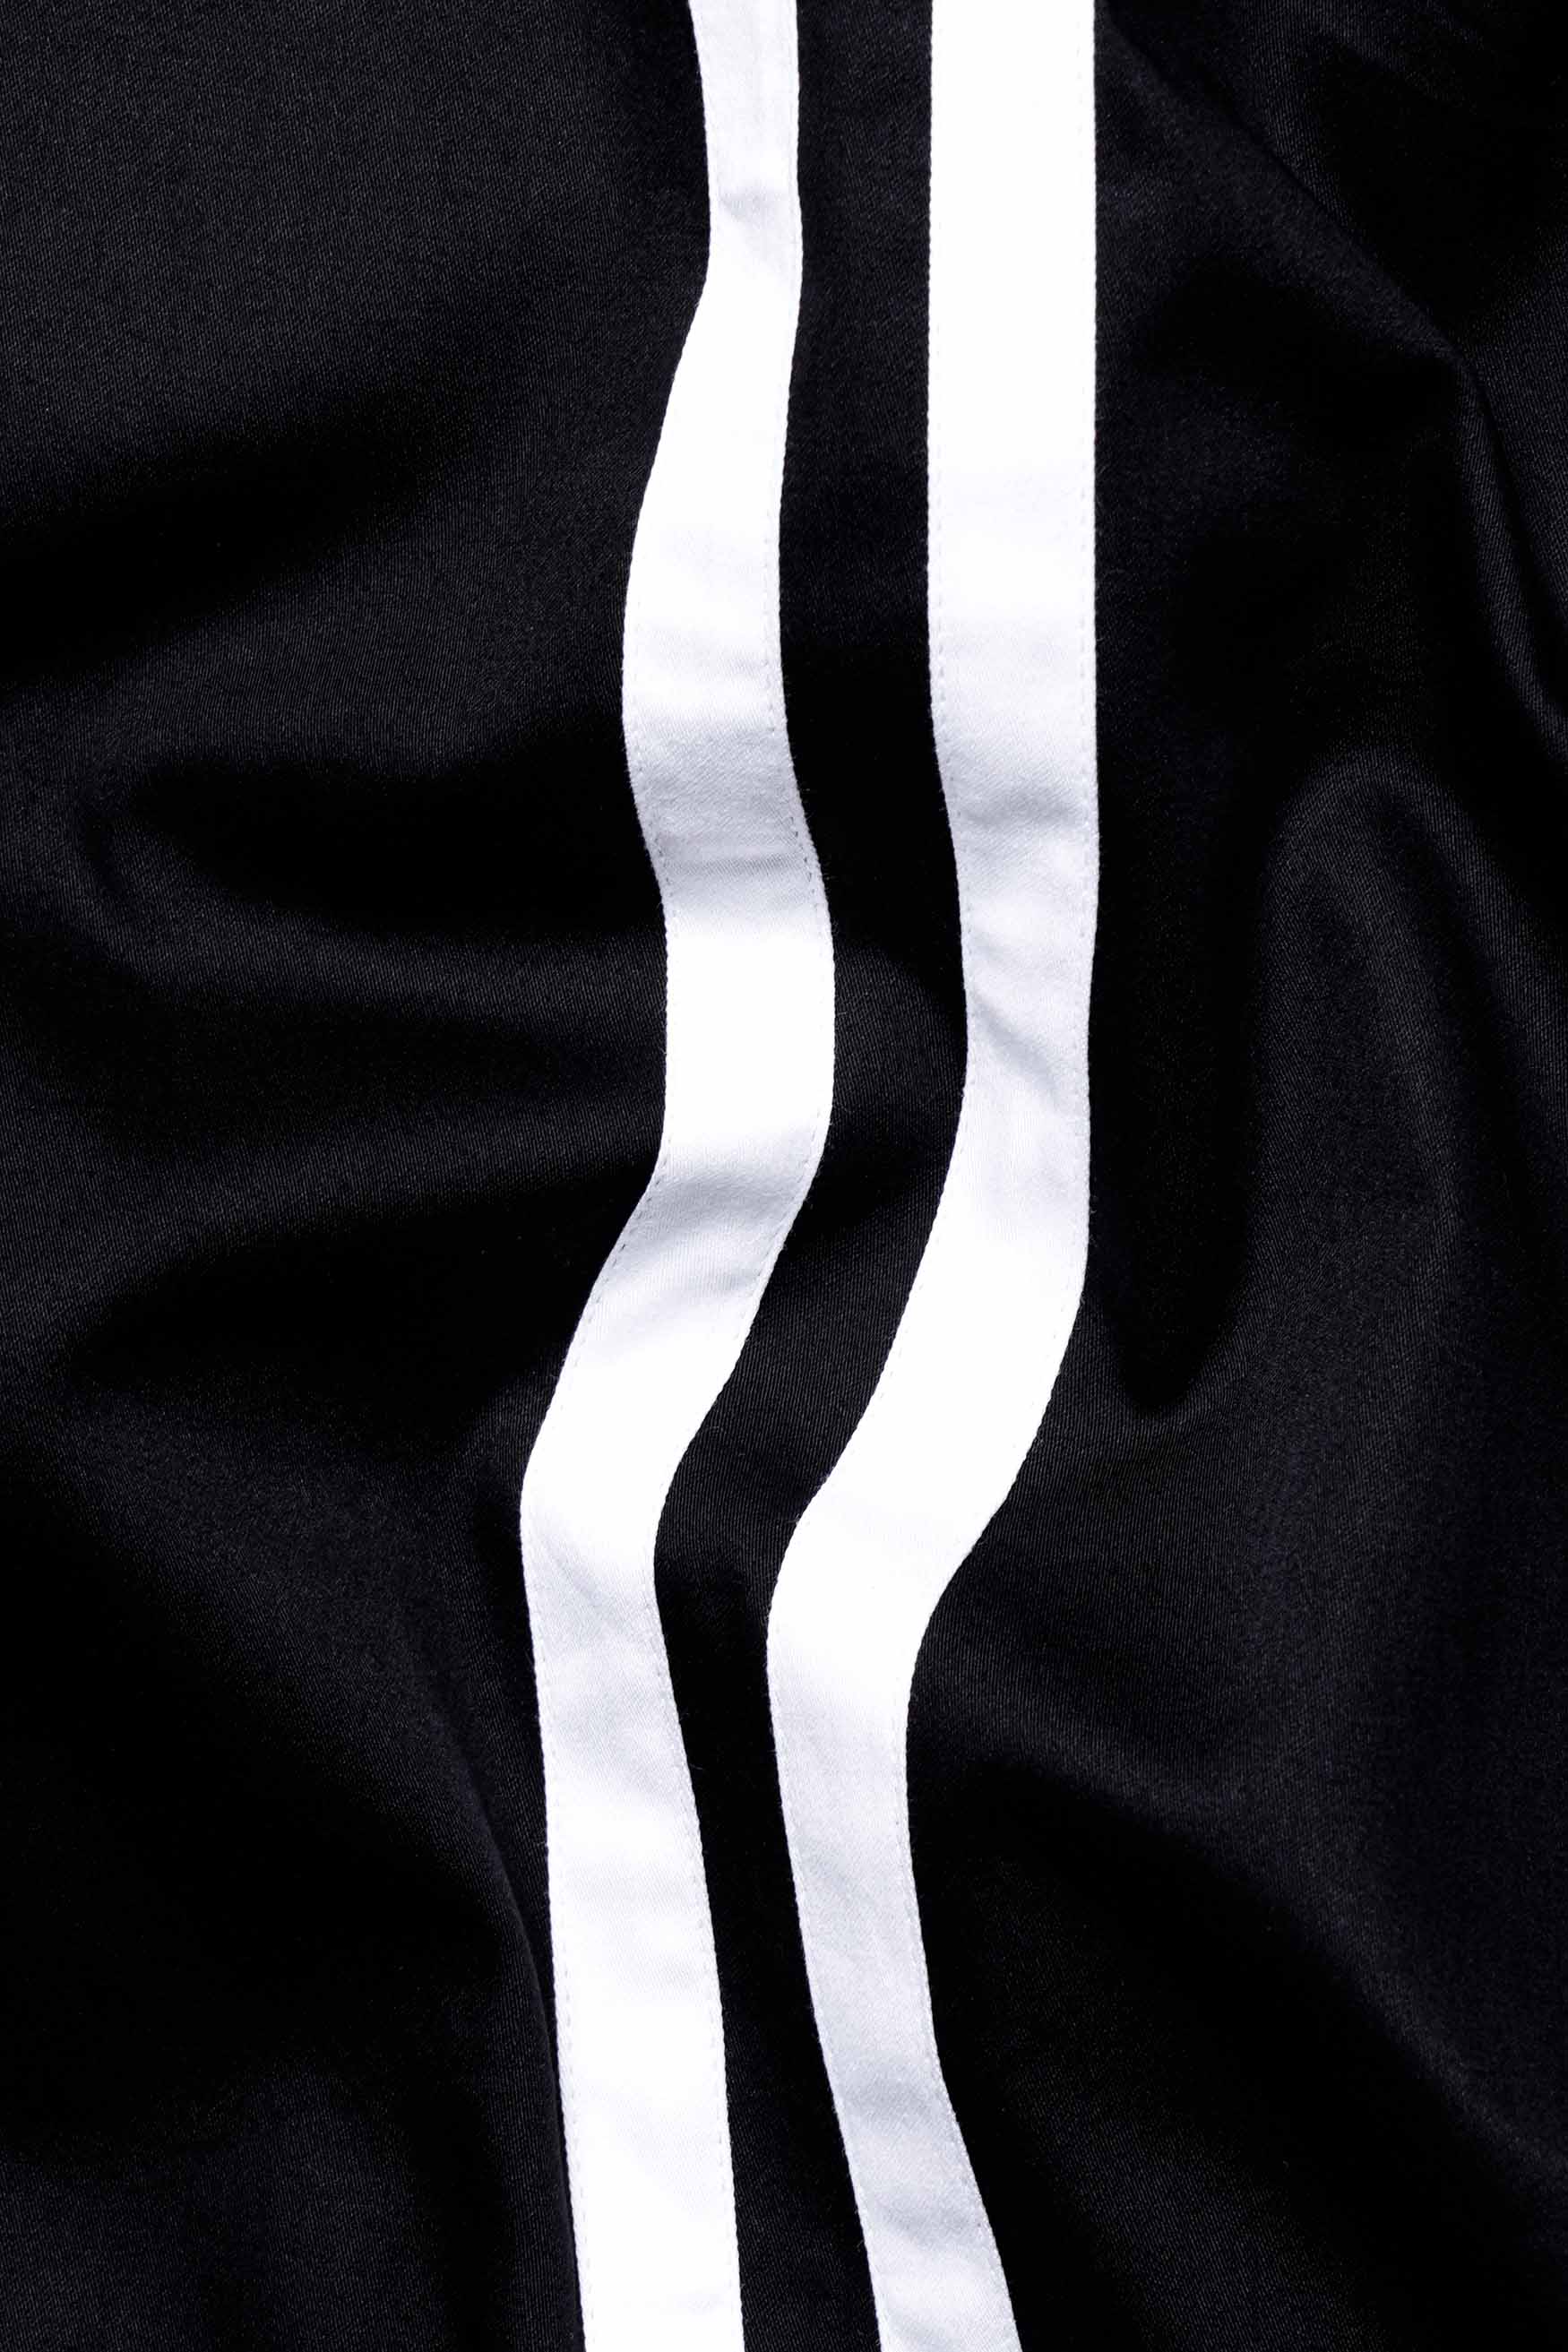  Jade Black Brand Logo Embroidered with Dual Striped Subtle Sheen Super Soft Premium Cotton Designer Shirt 12098-BLK-P782-38, 12098-BLK-P782-H-38, 12098-BLK-P782-39, 12098-BLK-P782-H-39, 12098-BLK-P782-40, 12098-BLK-P782-H-40, 12098-BLK-P782-42, 12098-BLK-P782-H-42, 12098-BLK-P782-44, 12098-BLK-P782-H-44, 12098-BLK-P782-46, 12098-BLK-P782-H-46, 12098-BLK-P782-48, 12098-BLK-P782-H-48, 12098-BLK-P782-50, 12098-BLK-P782-H-50, 12098-BLK-P782-52, 12098-BLK-P782-H-52